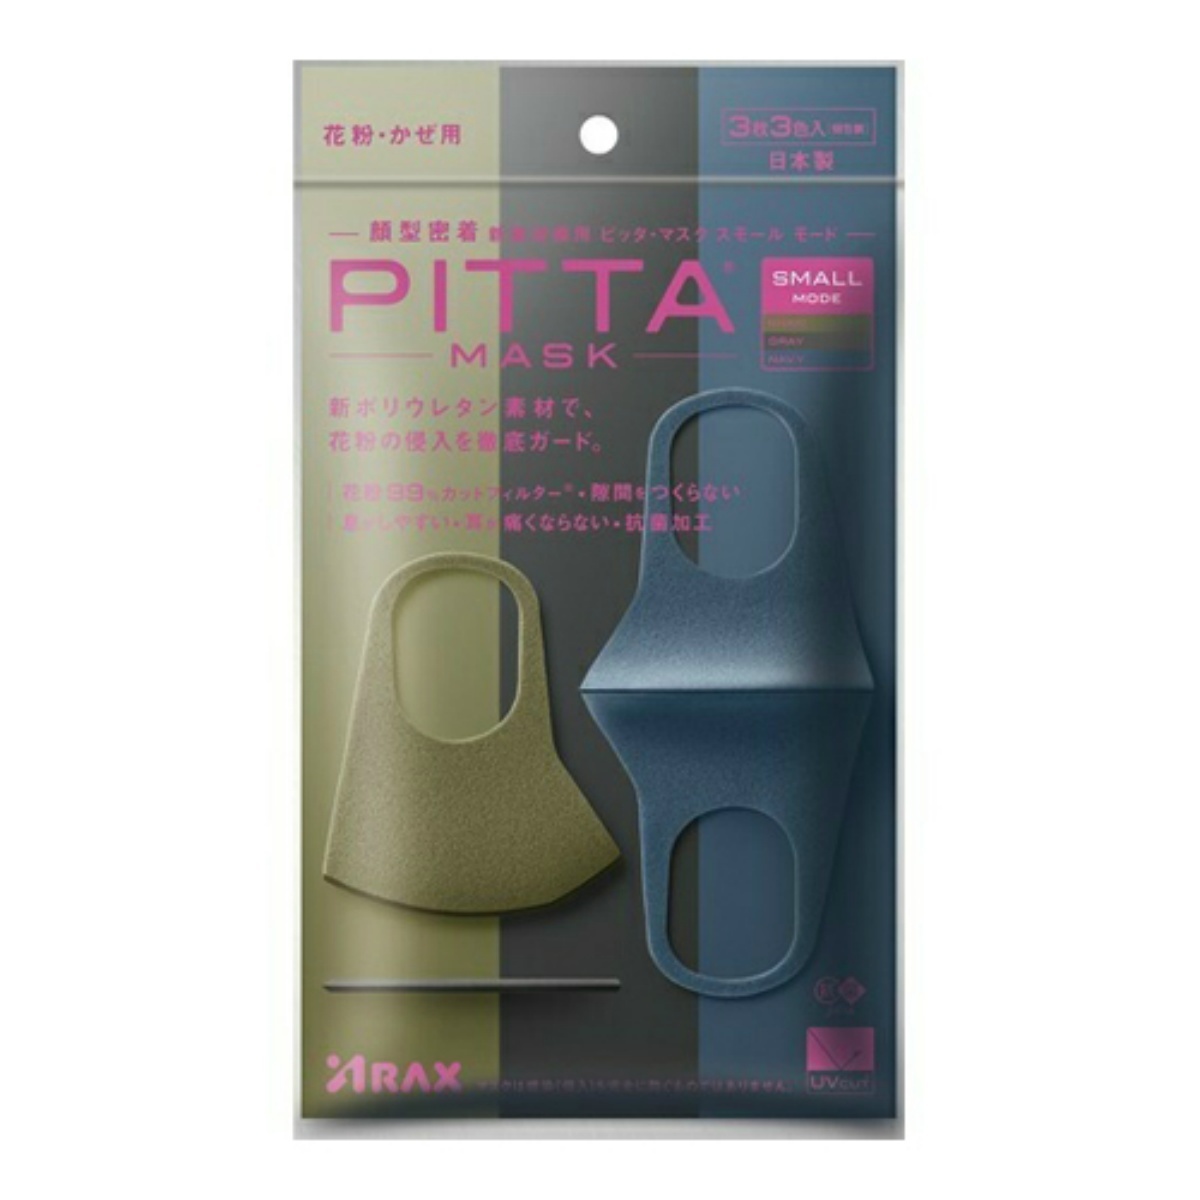 ARAX ARAX PITTA MASK SMALL MODE KHAKI/GRAY/NAVY 個包装 3枚入（1袋1枚入×3色）×2個 4987009157378 PITTA MASK 衛生用品マスクの商品画像